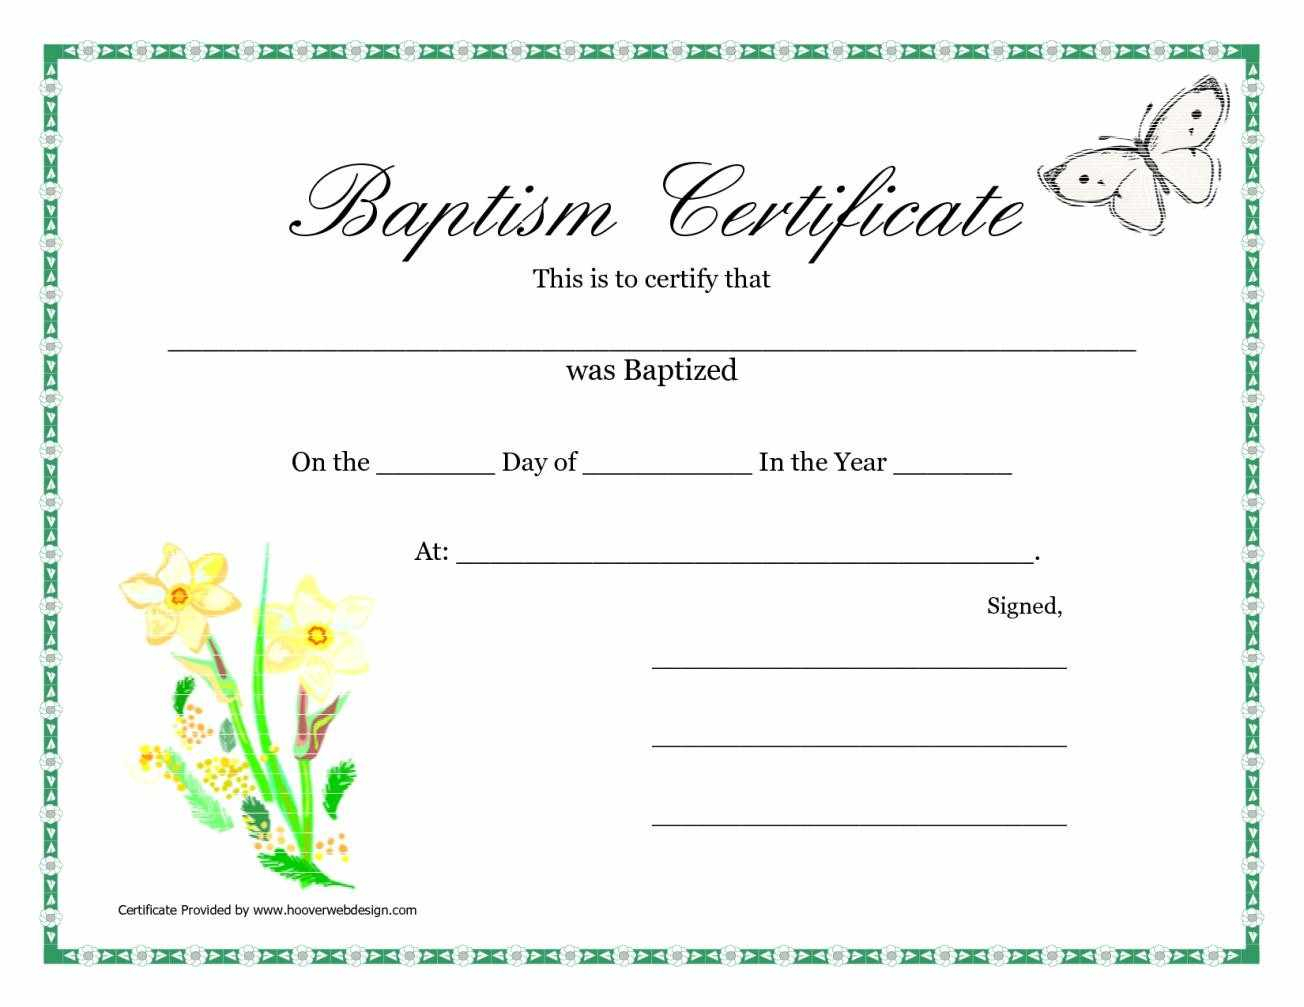 Sample Baptism Certificate Templates | Sample Certificate Within Baptism Certificate Template Download